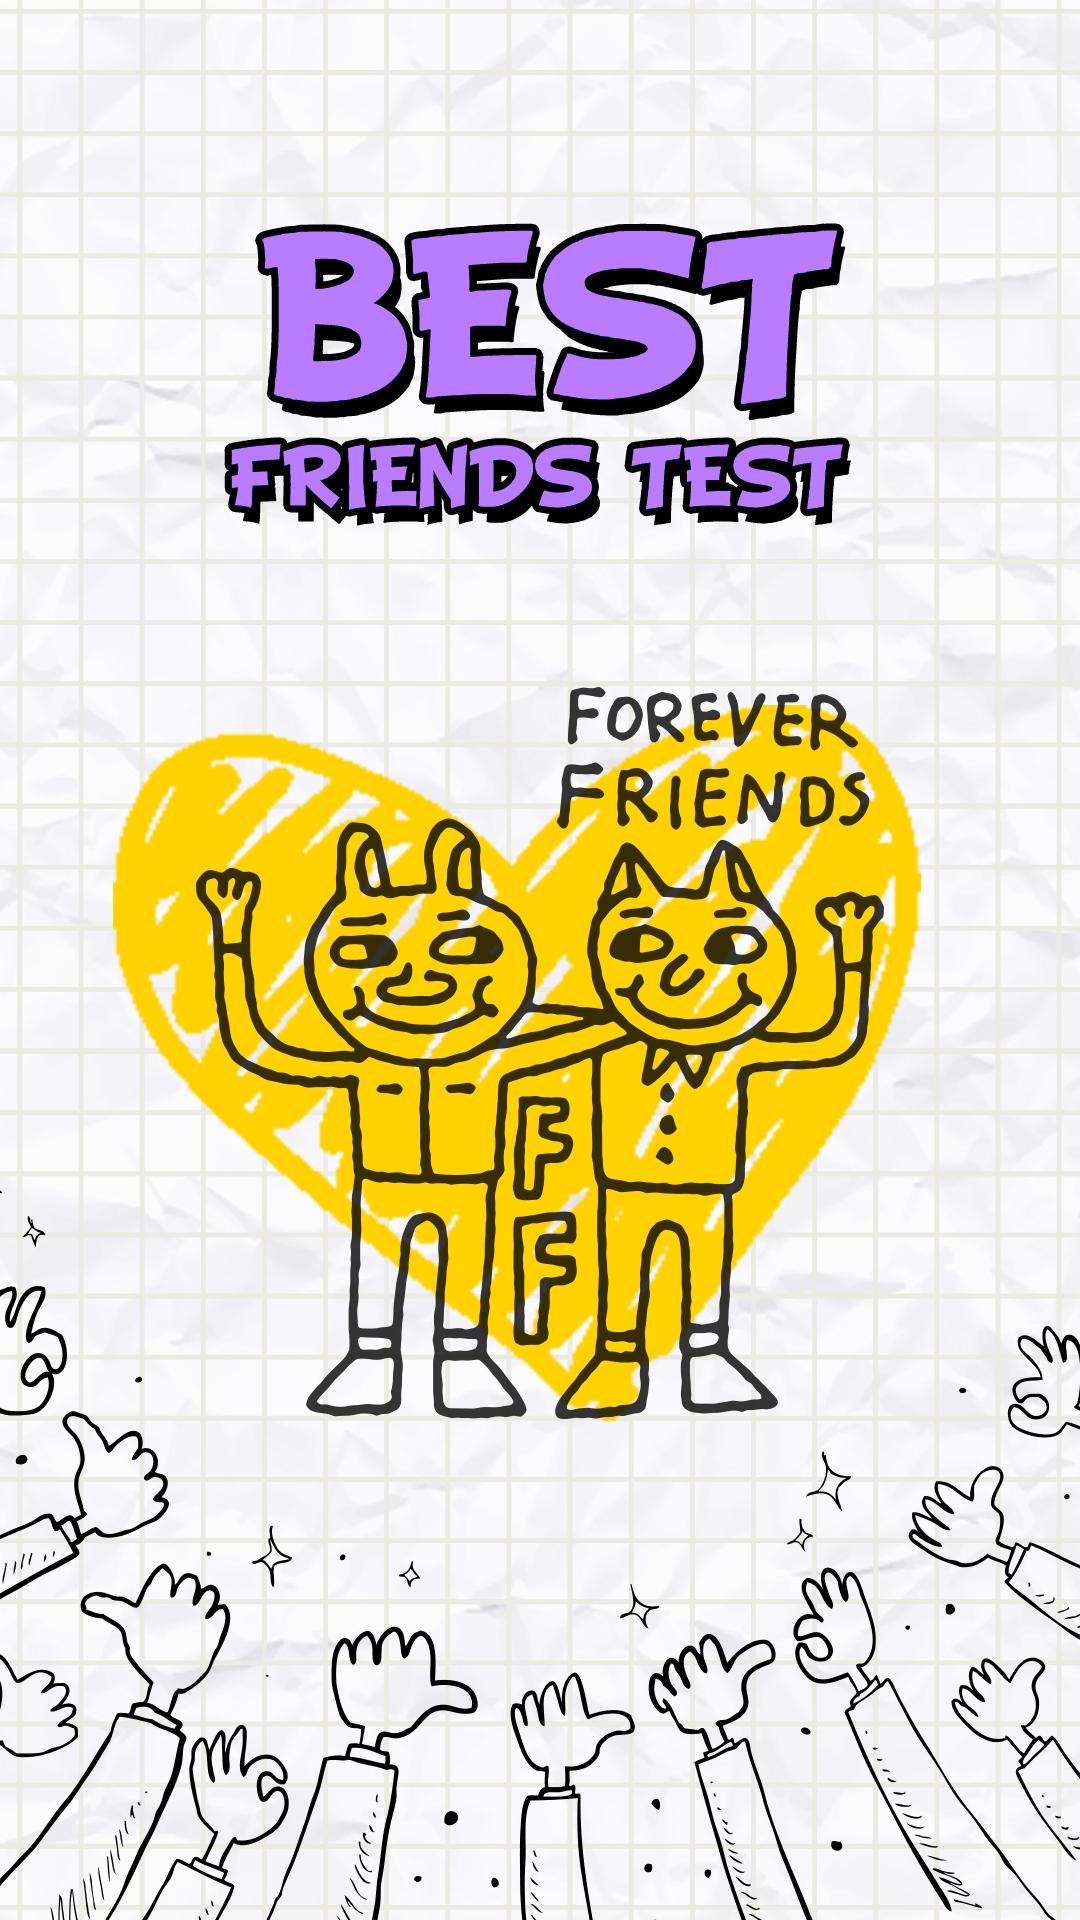 Friends tests. BFF приложение. Friendship Test. Test friends. BFF Test.